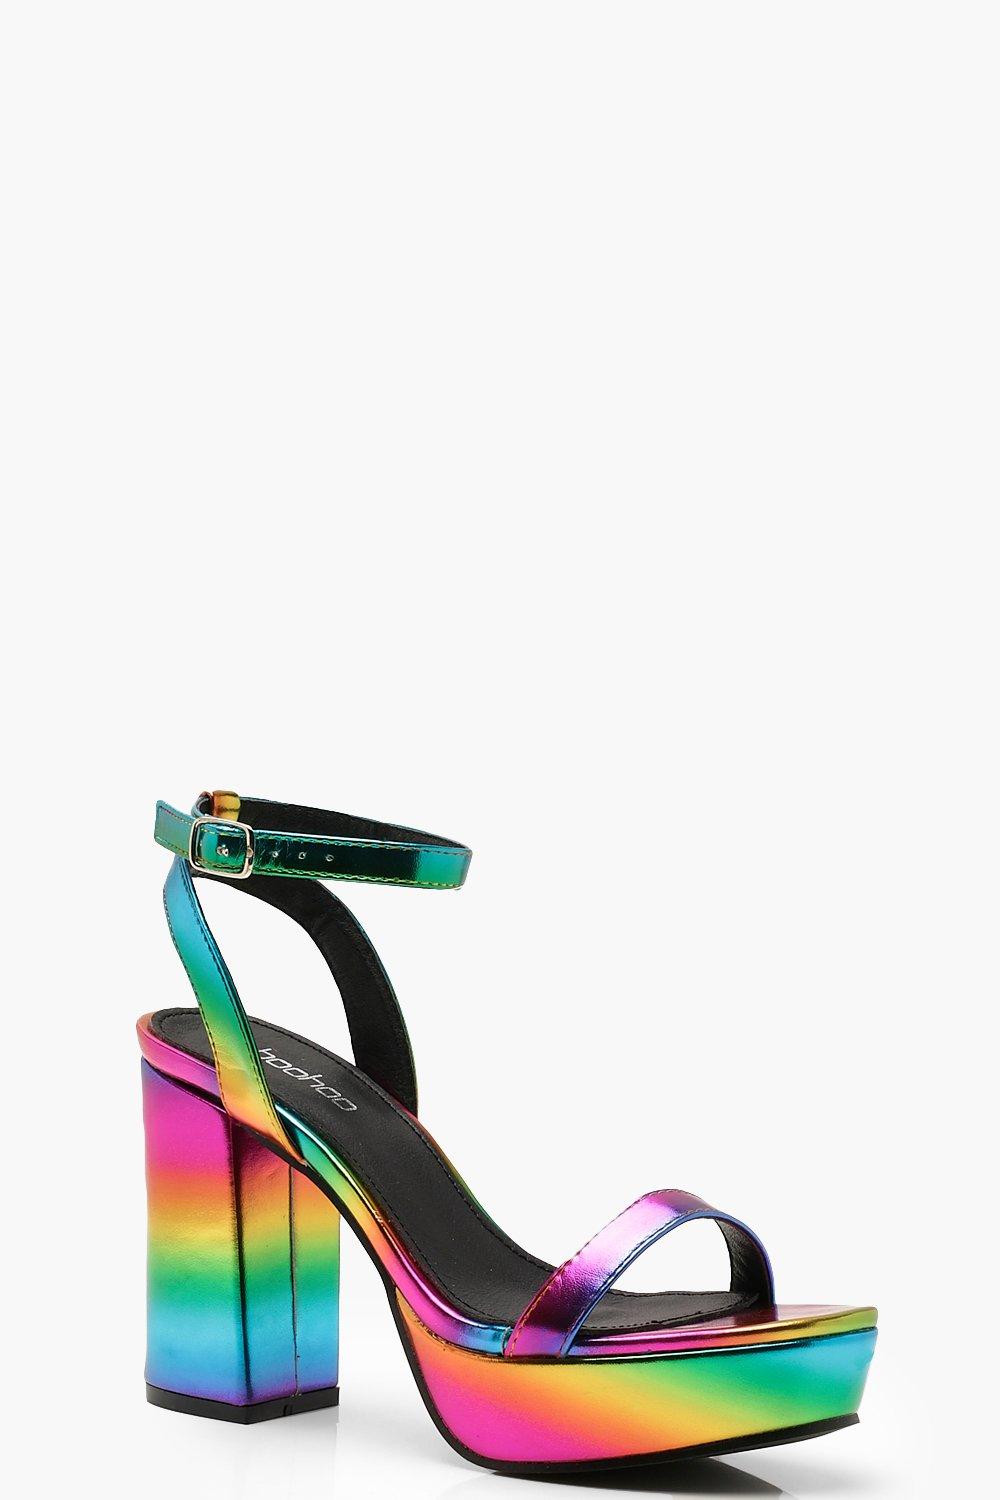 rainbow platform shoes